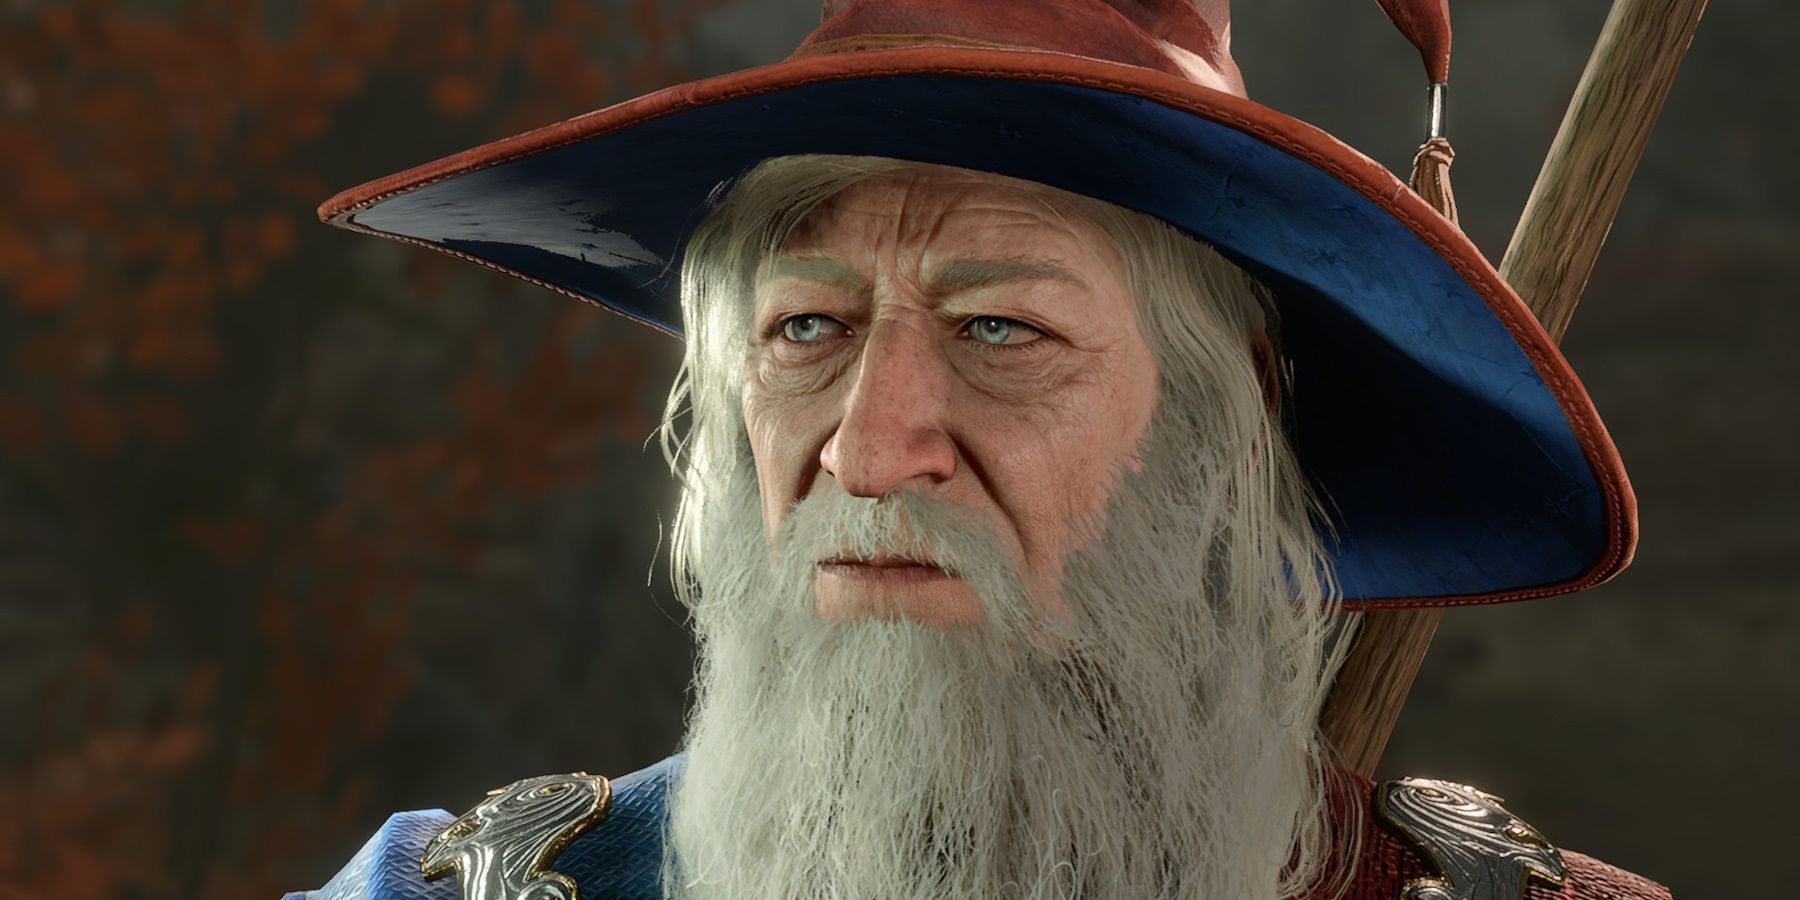 The famous wizard Elminster as he appears in Baldur's Gate 3.